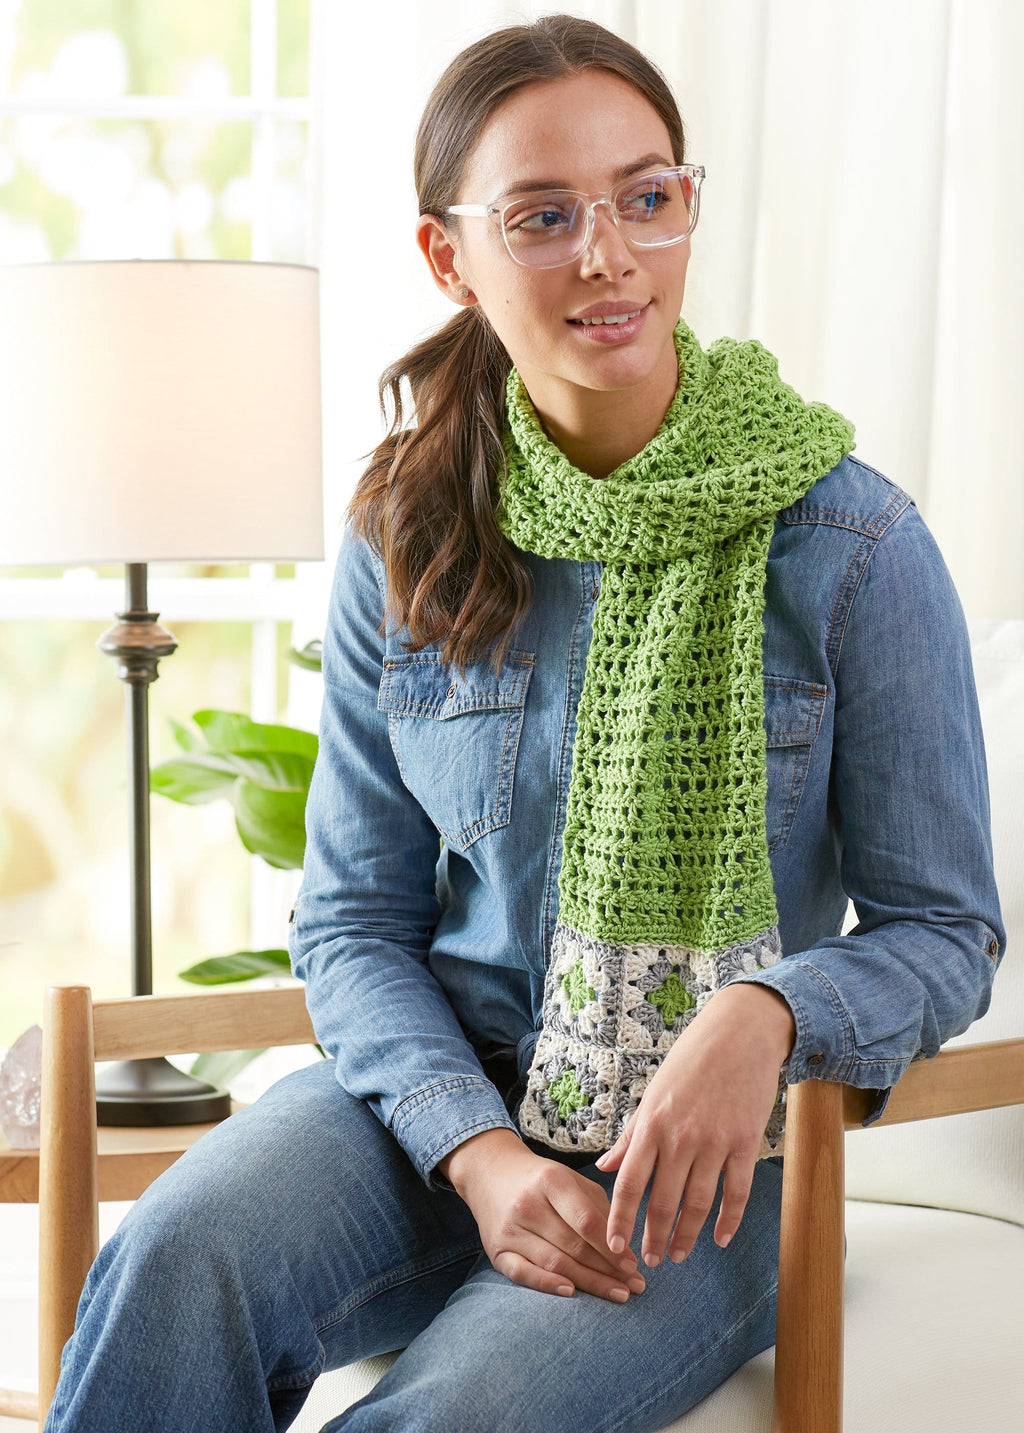 Granny Square Crochet for Beginners US Version on Apple Books